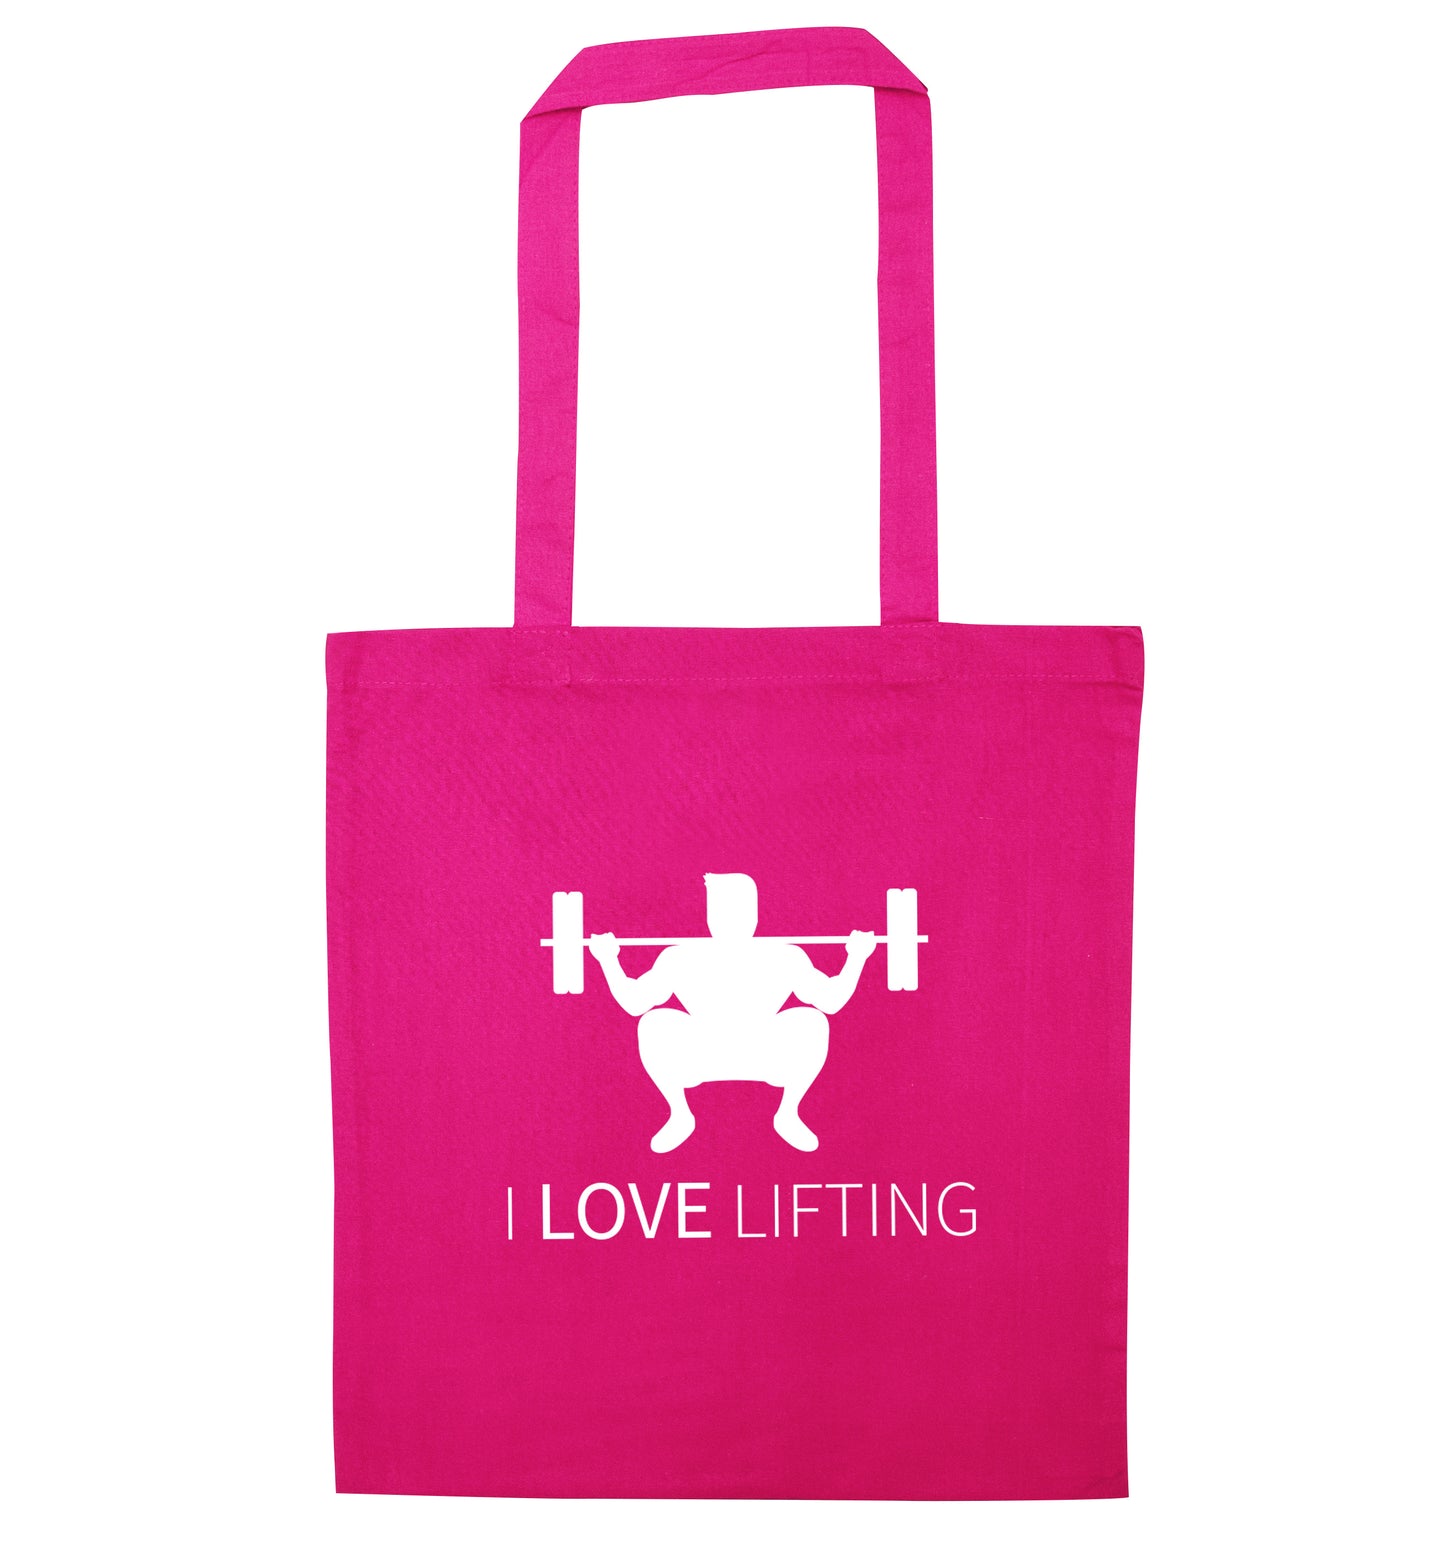 I Love Lifting pink tote bag